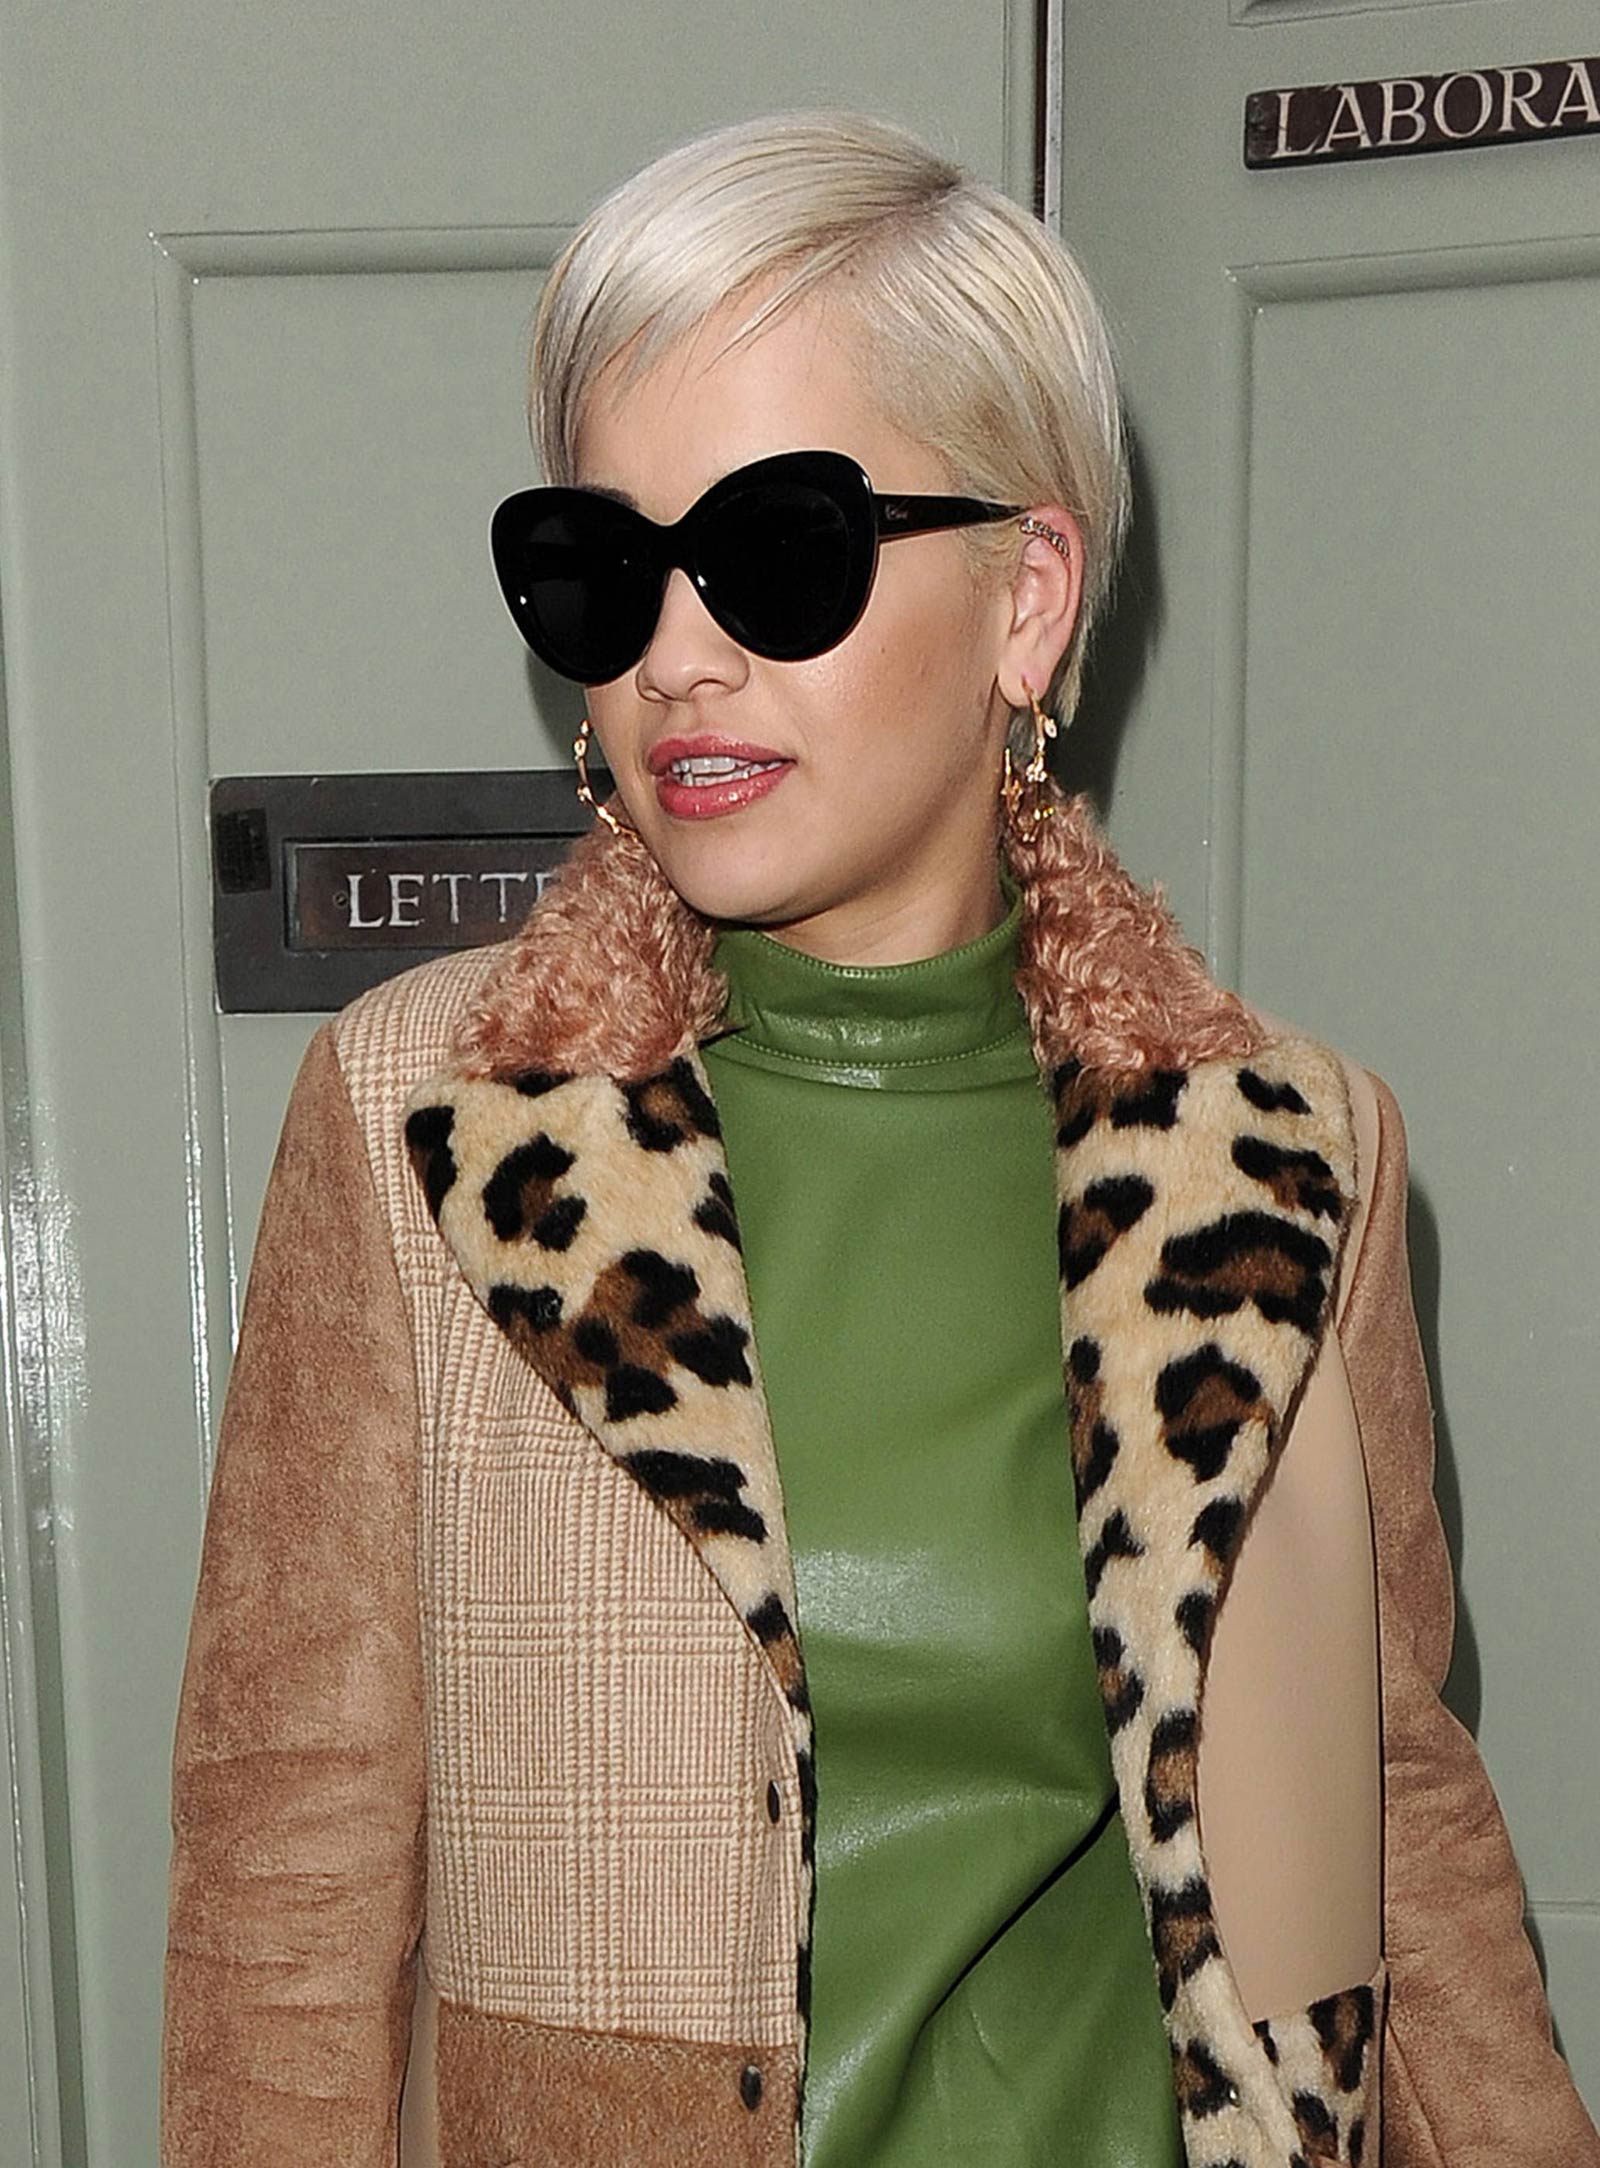 Rita Ora leaving a studio in London